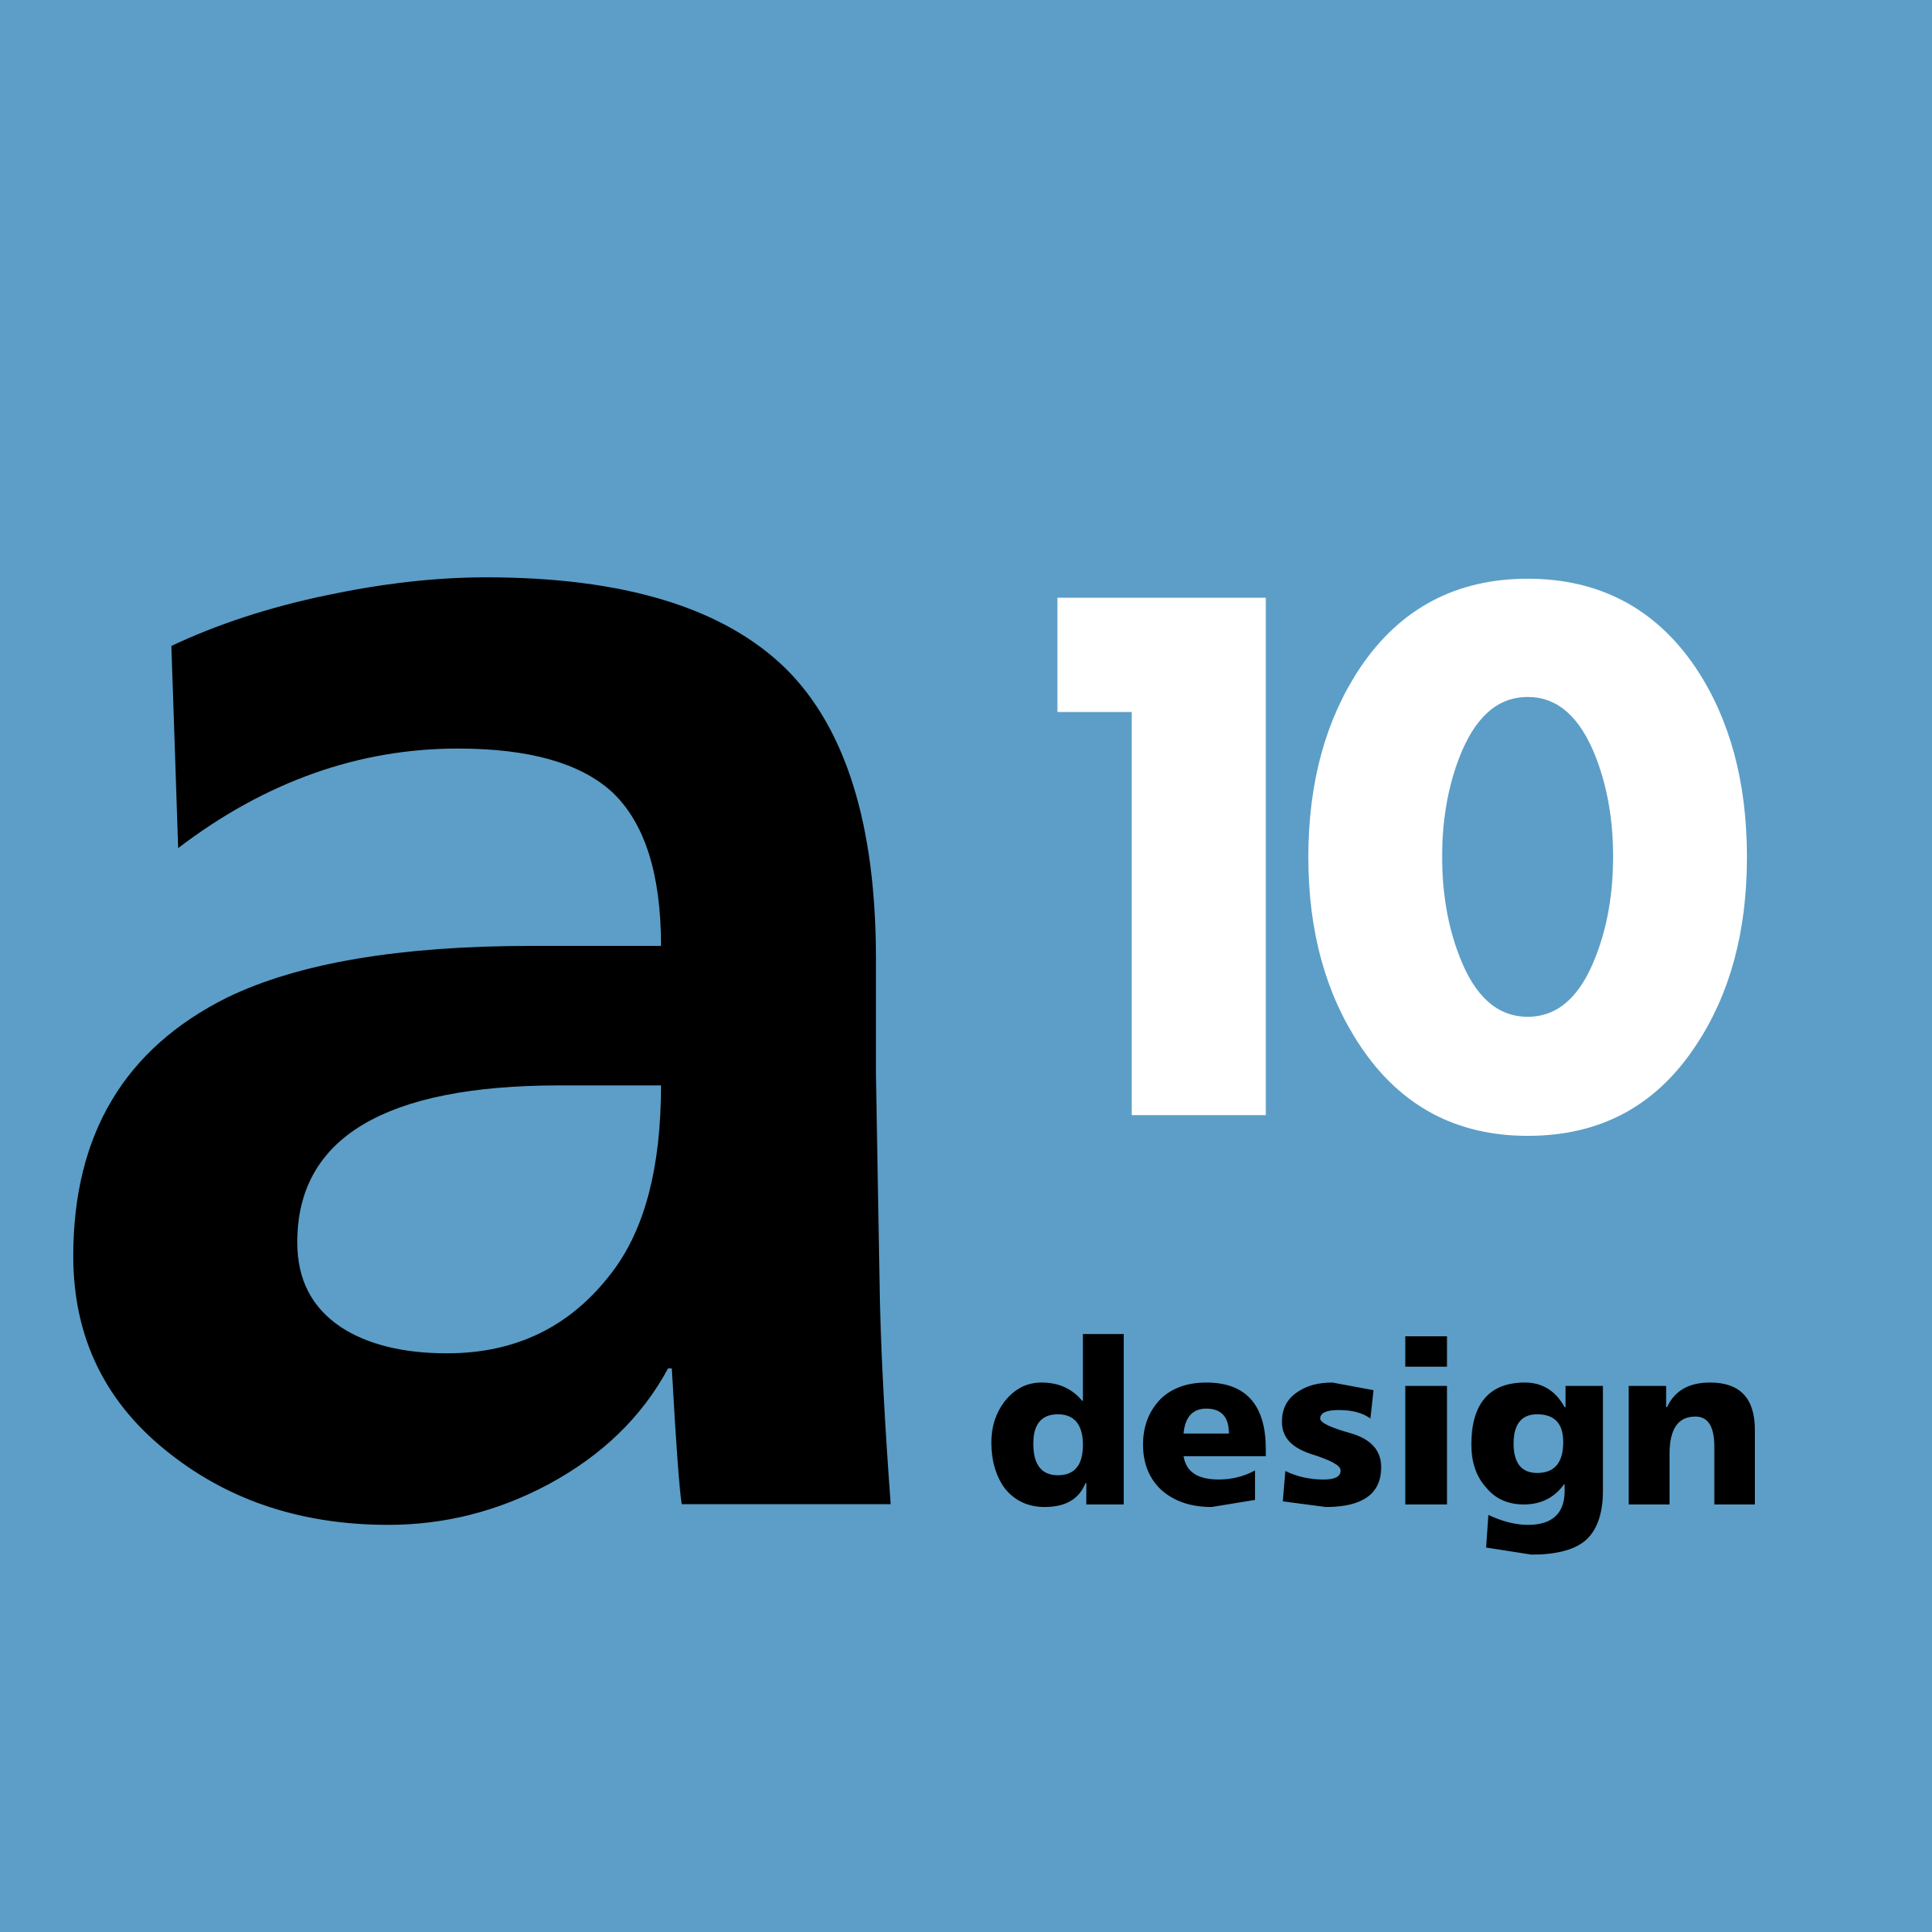 A10 Logo - A10 design Logo PNG Transparent & SVG Vector